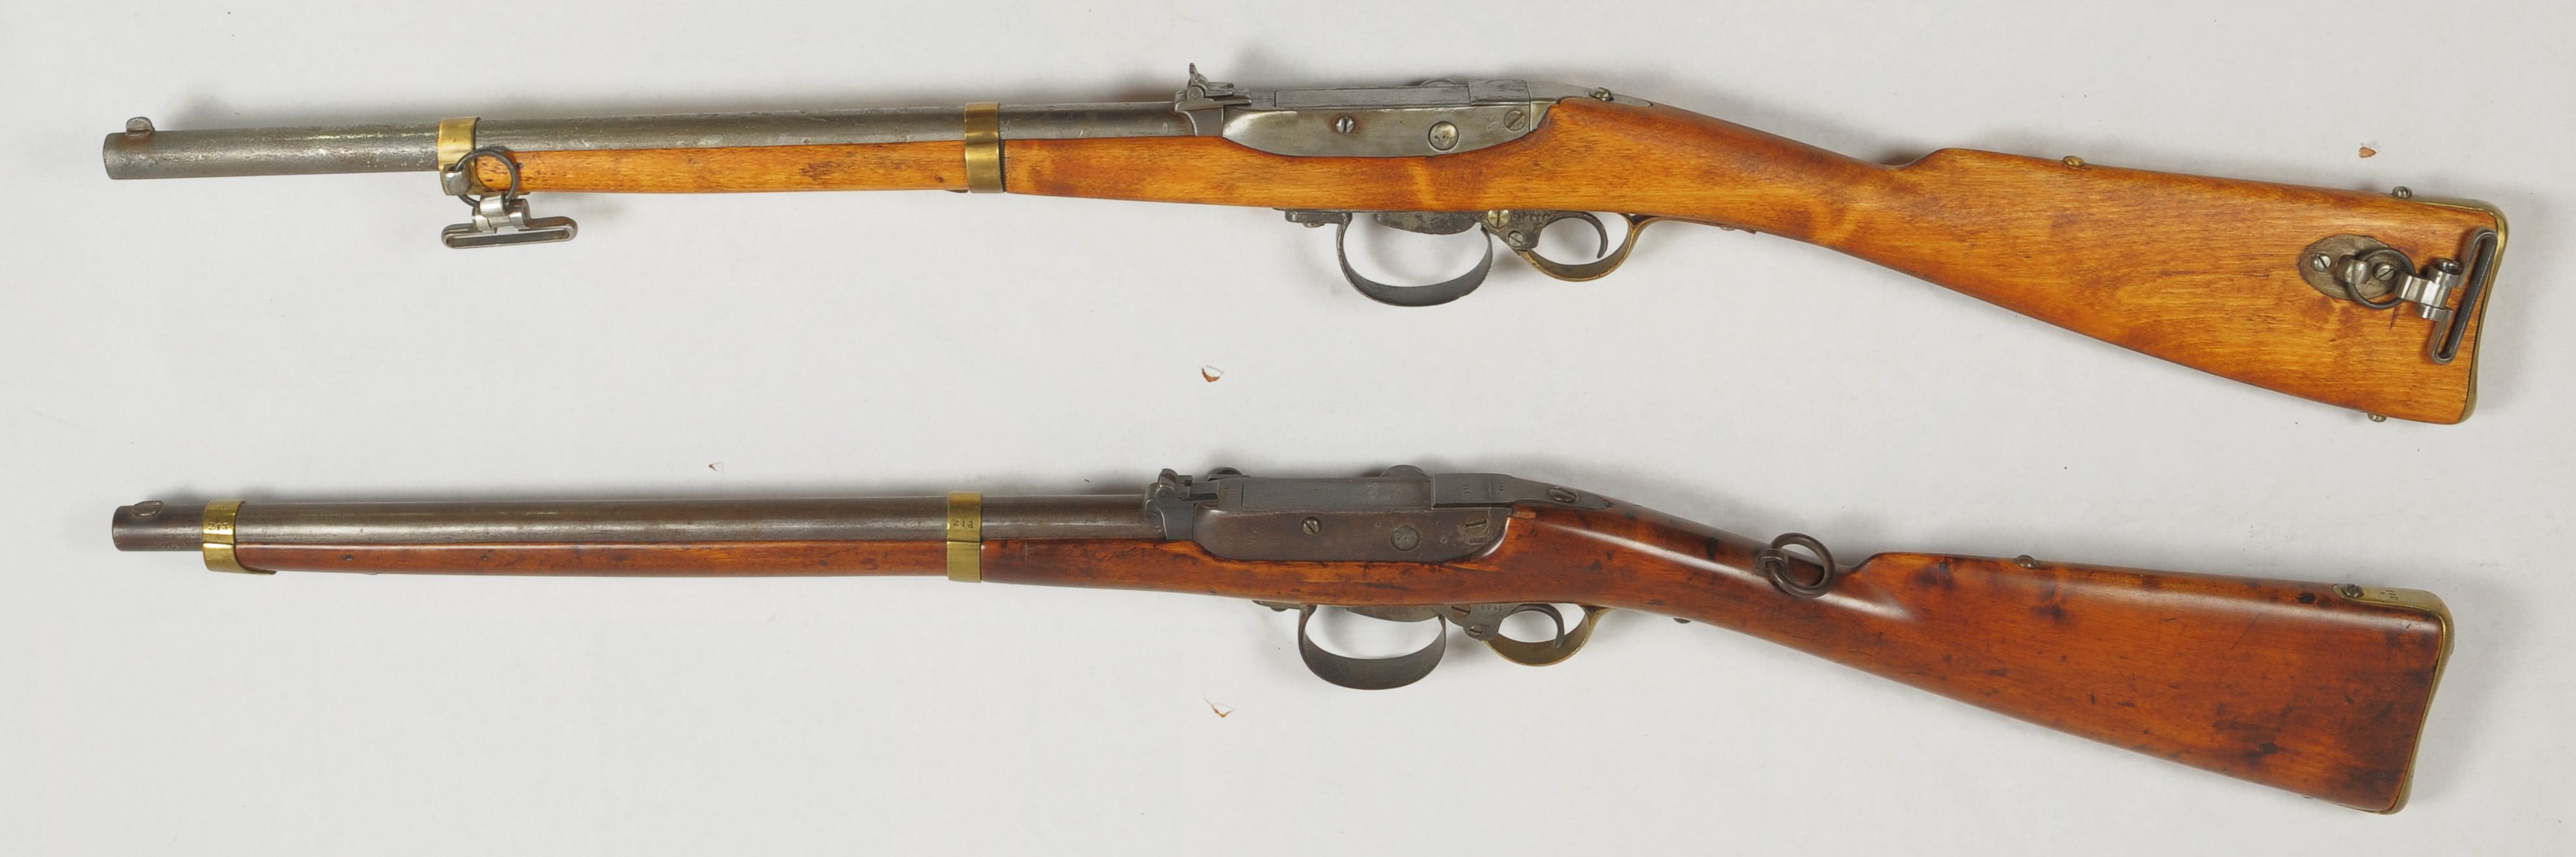 ./guns/rifle/bilder/Rifle-Kongsberg-Kammerlader-M1857-59-2.jpg